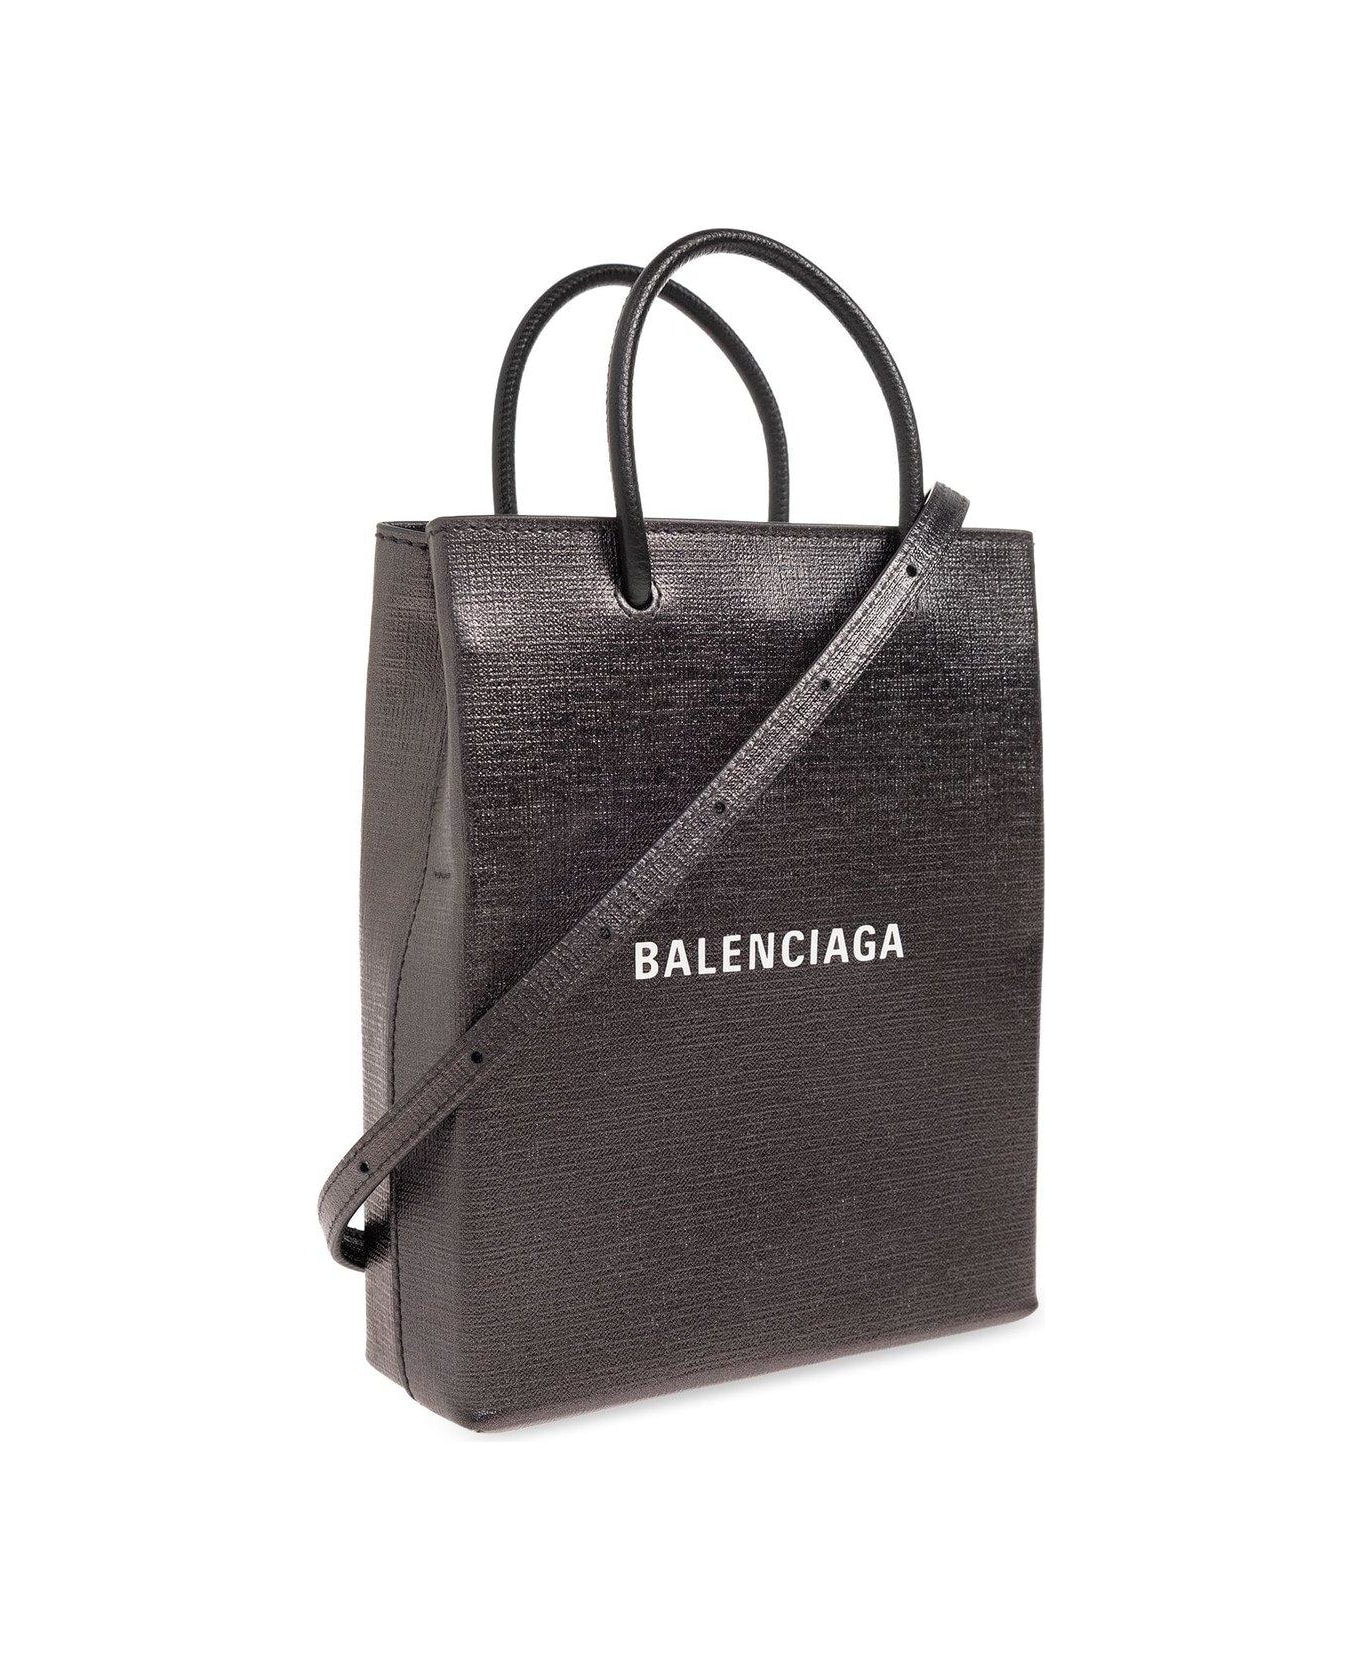 Balenciaga Metallized Large Tote Bag トートバッグ